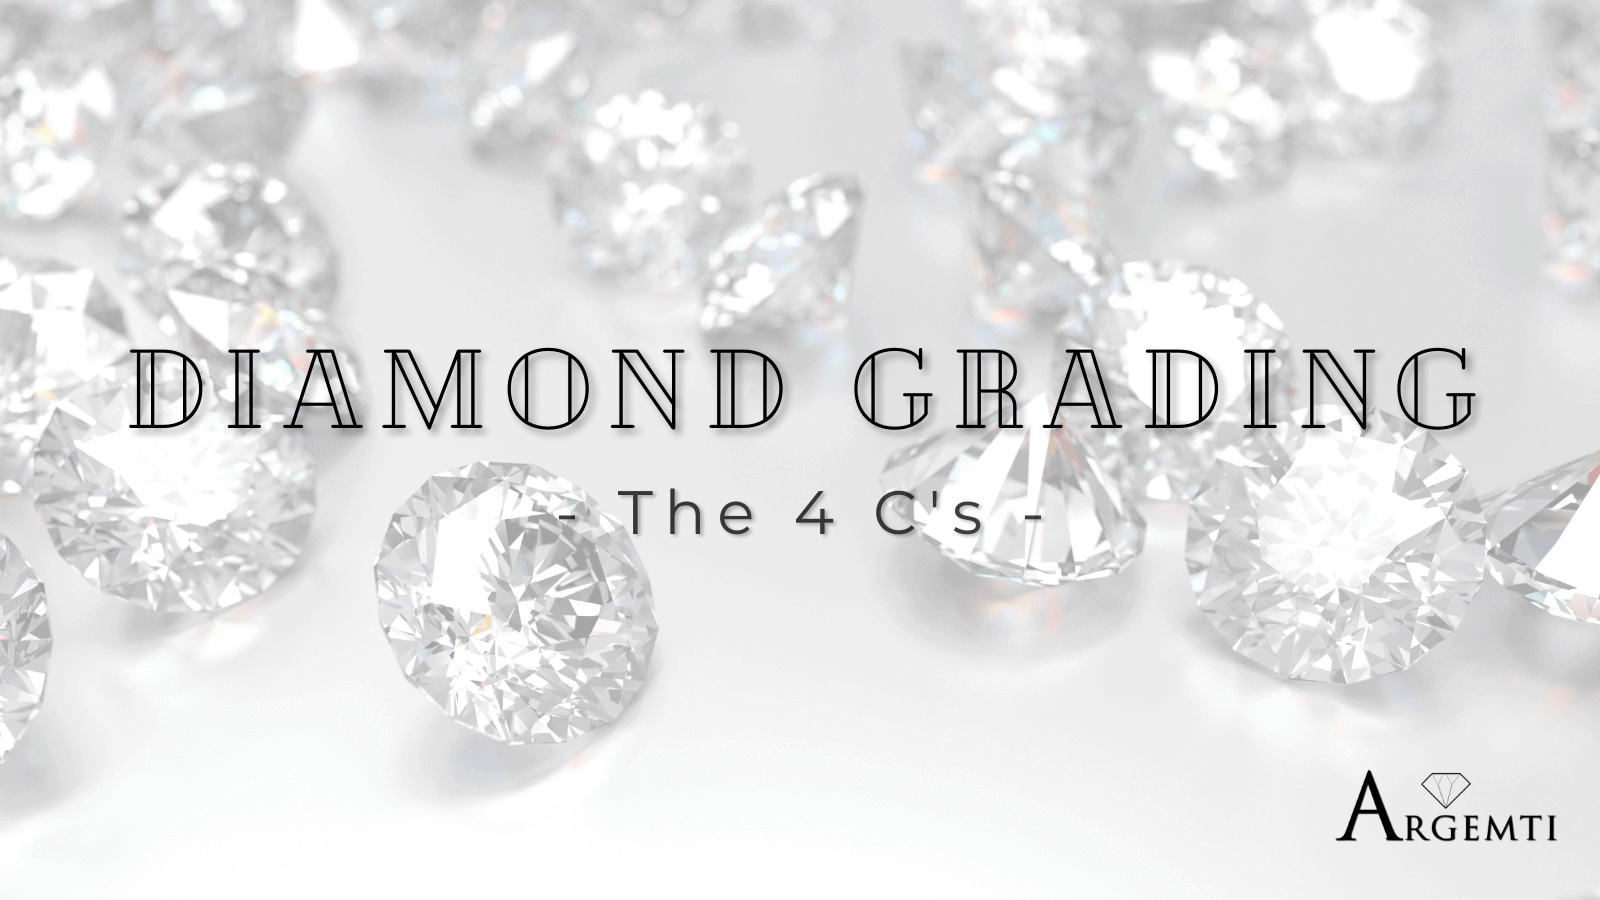 Diamond Grading The 4 C's